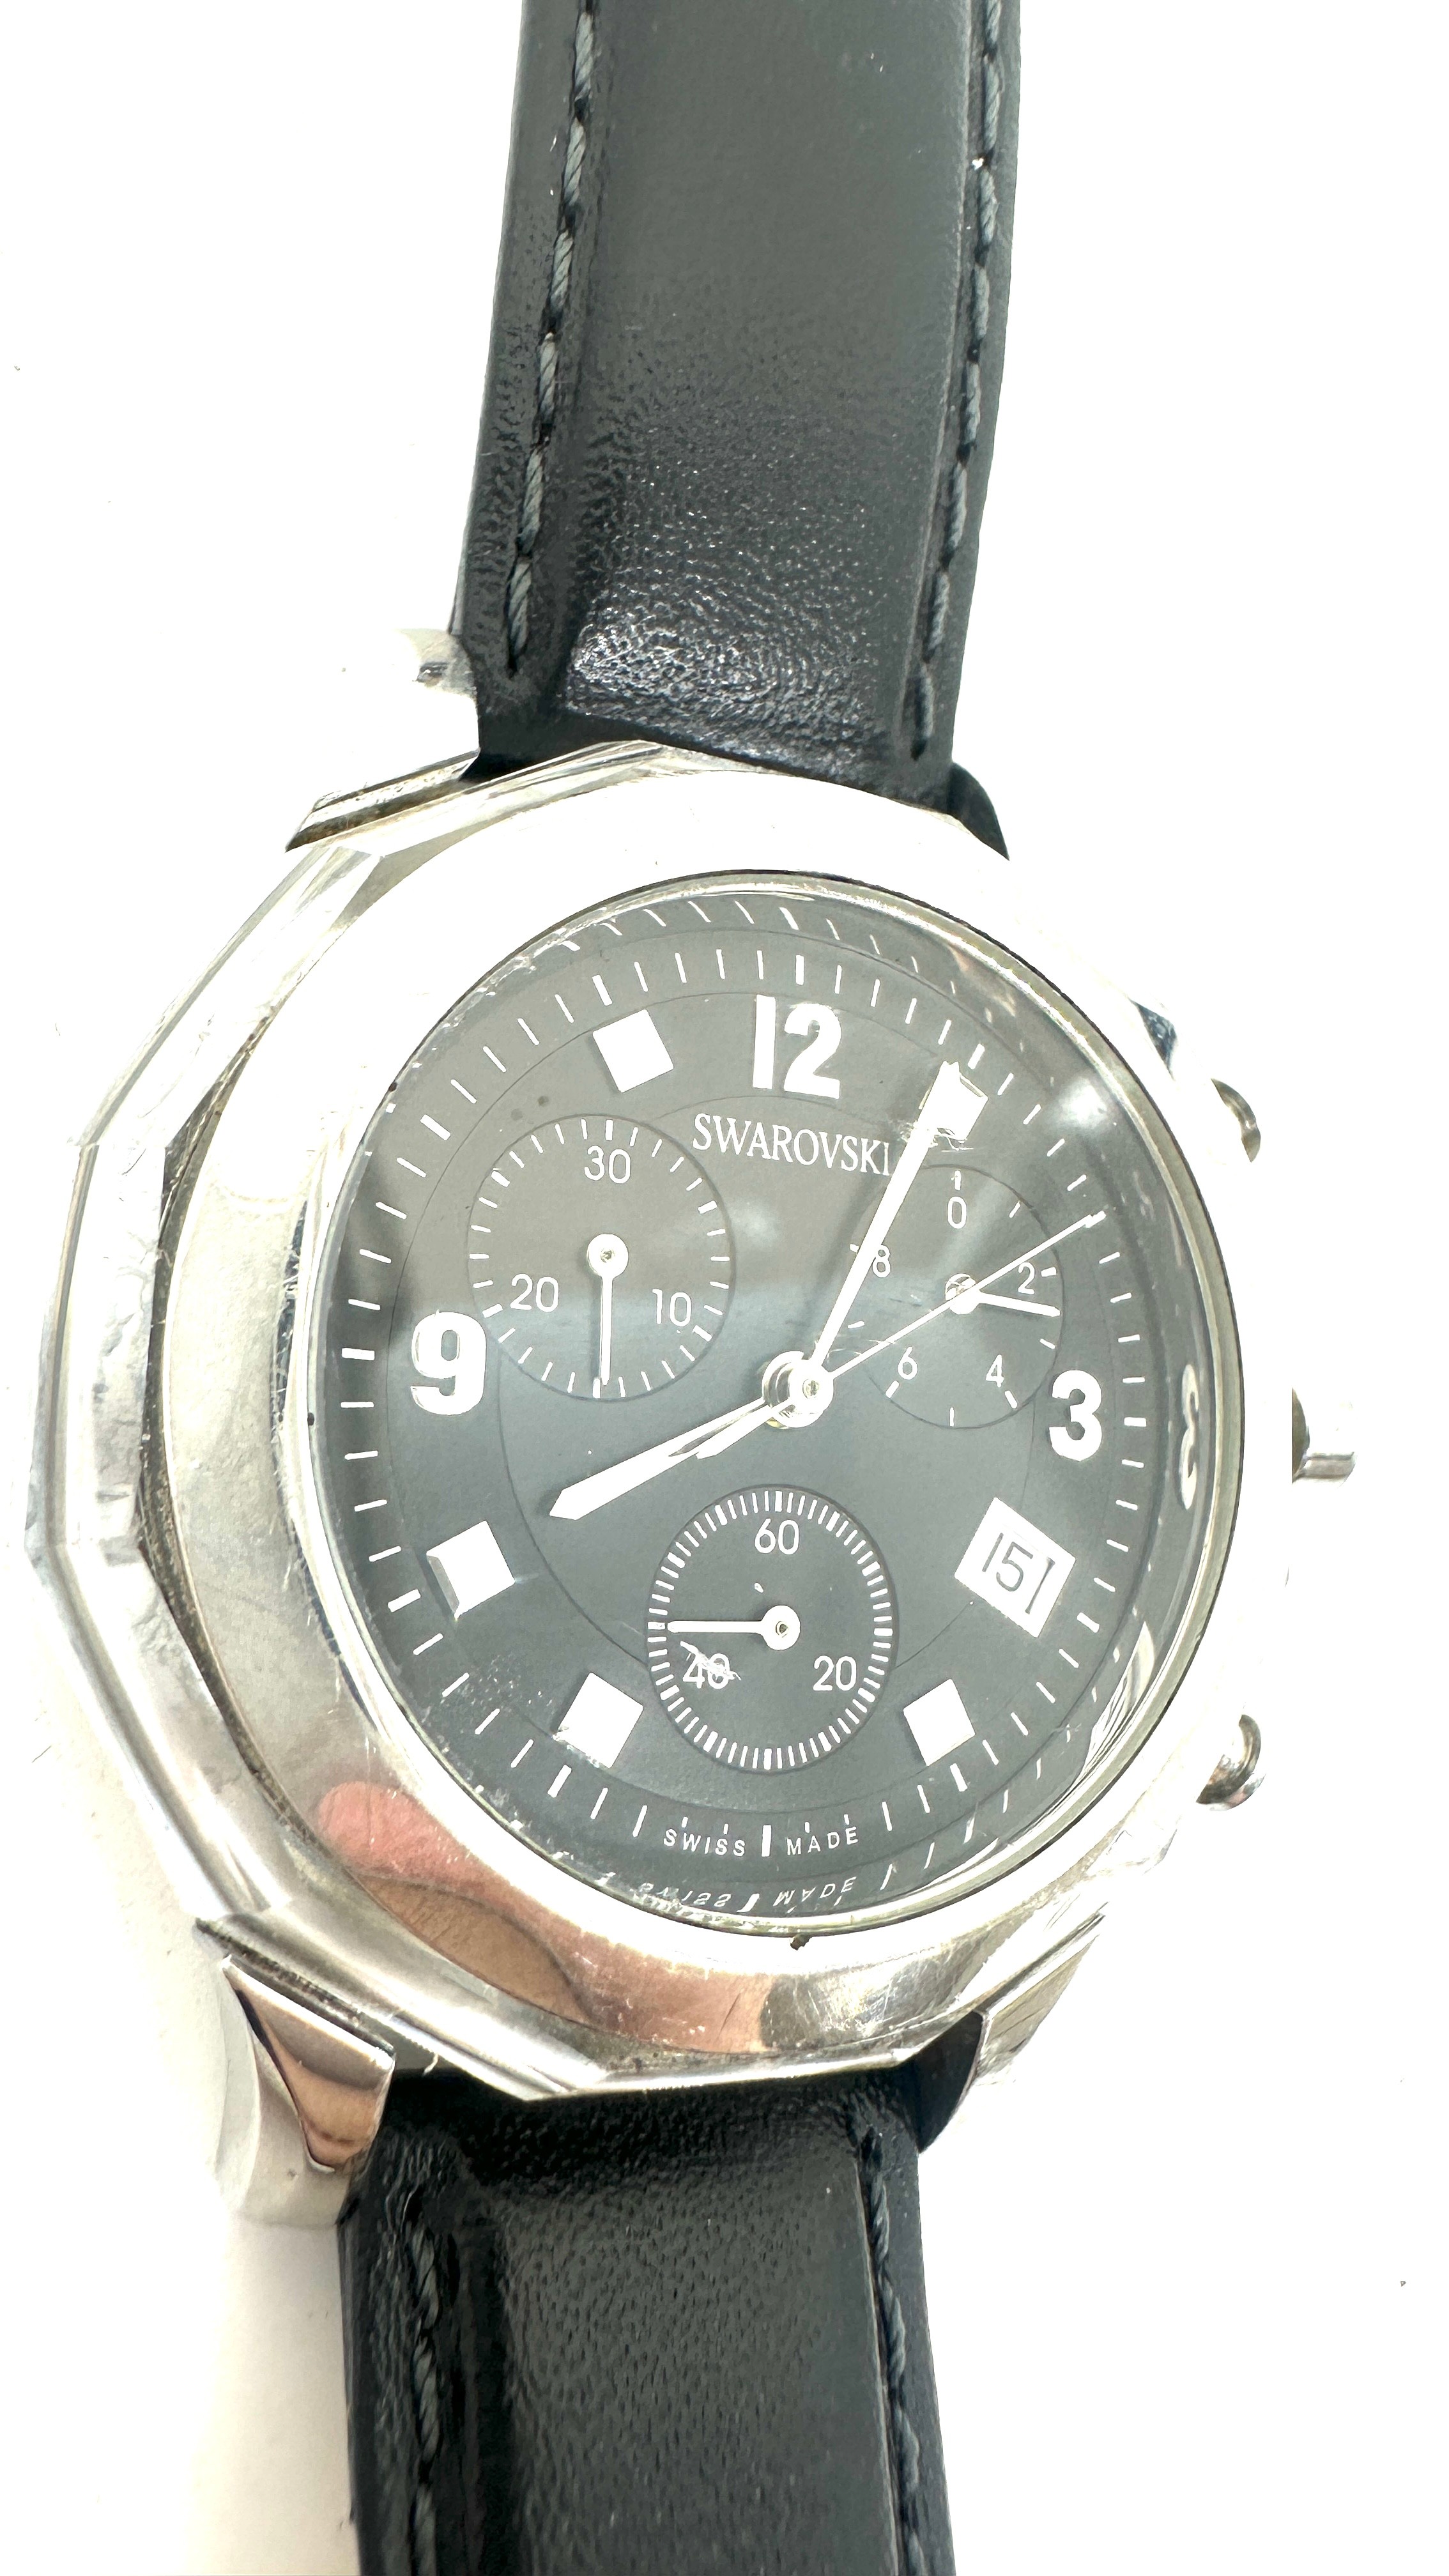 Swarovski chronograph wrist watch, ticking but no warranty given - Image 2 of 4